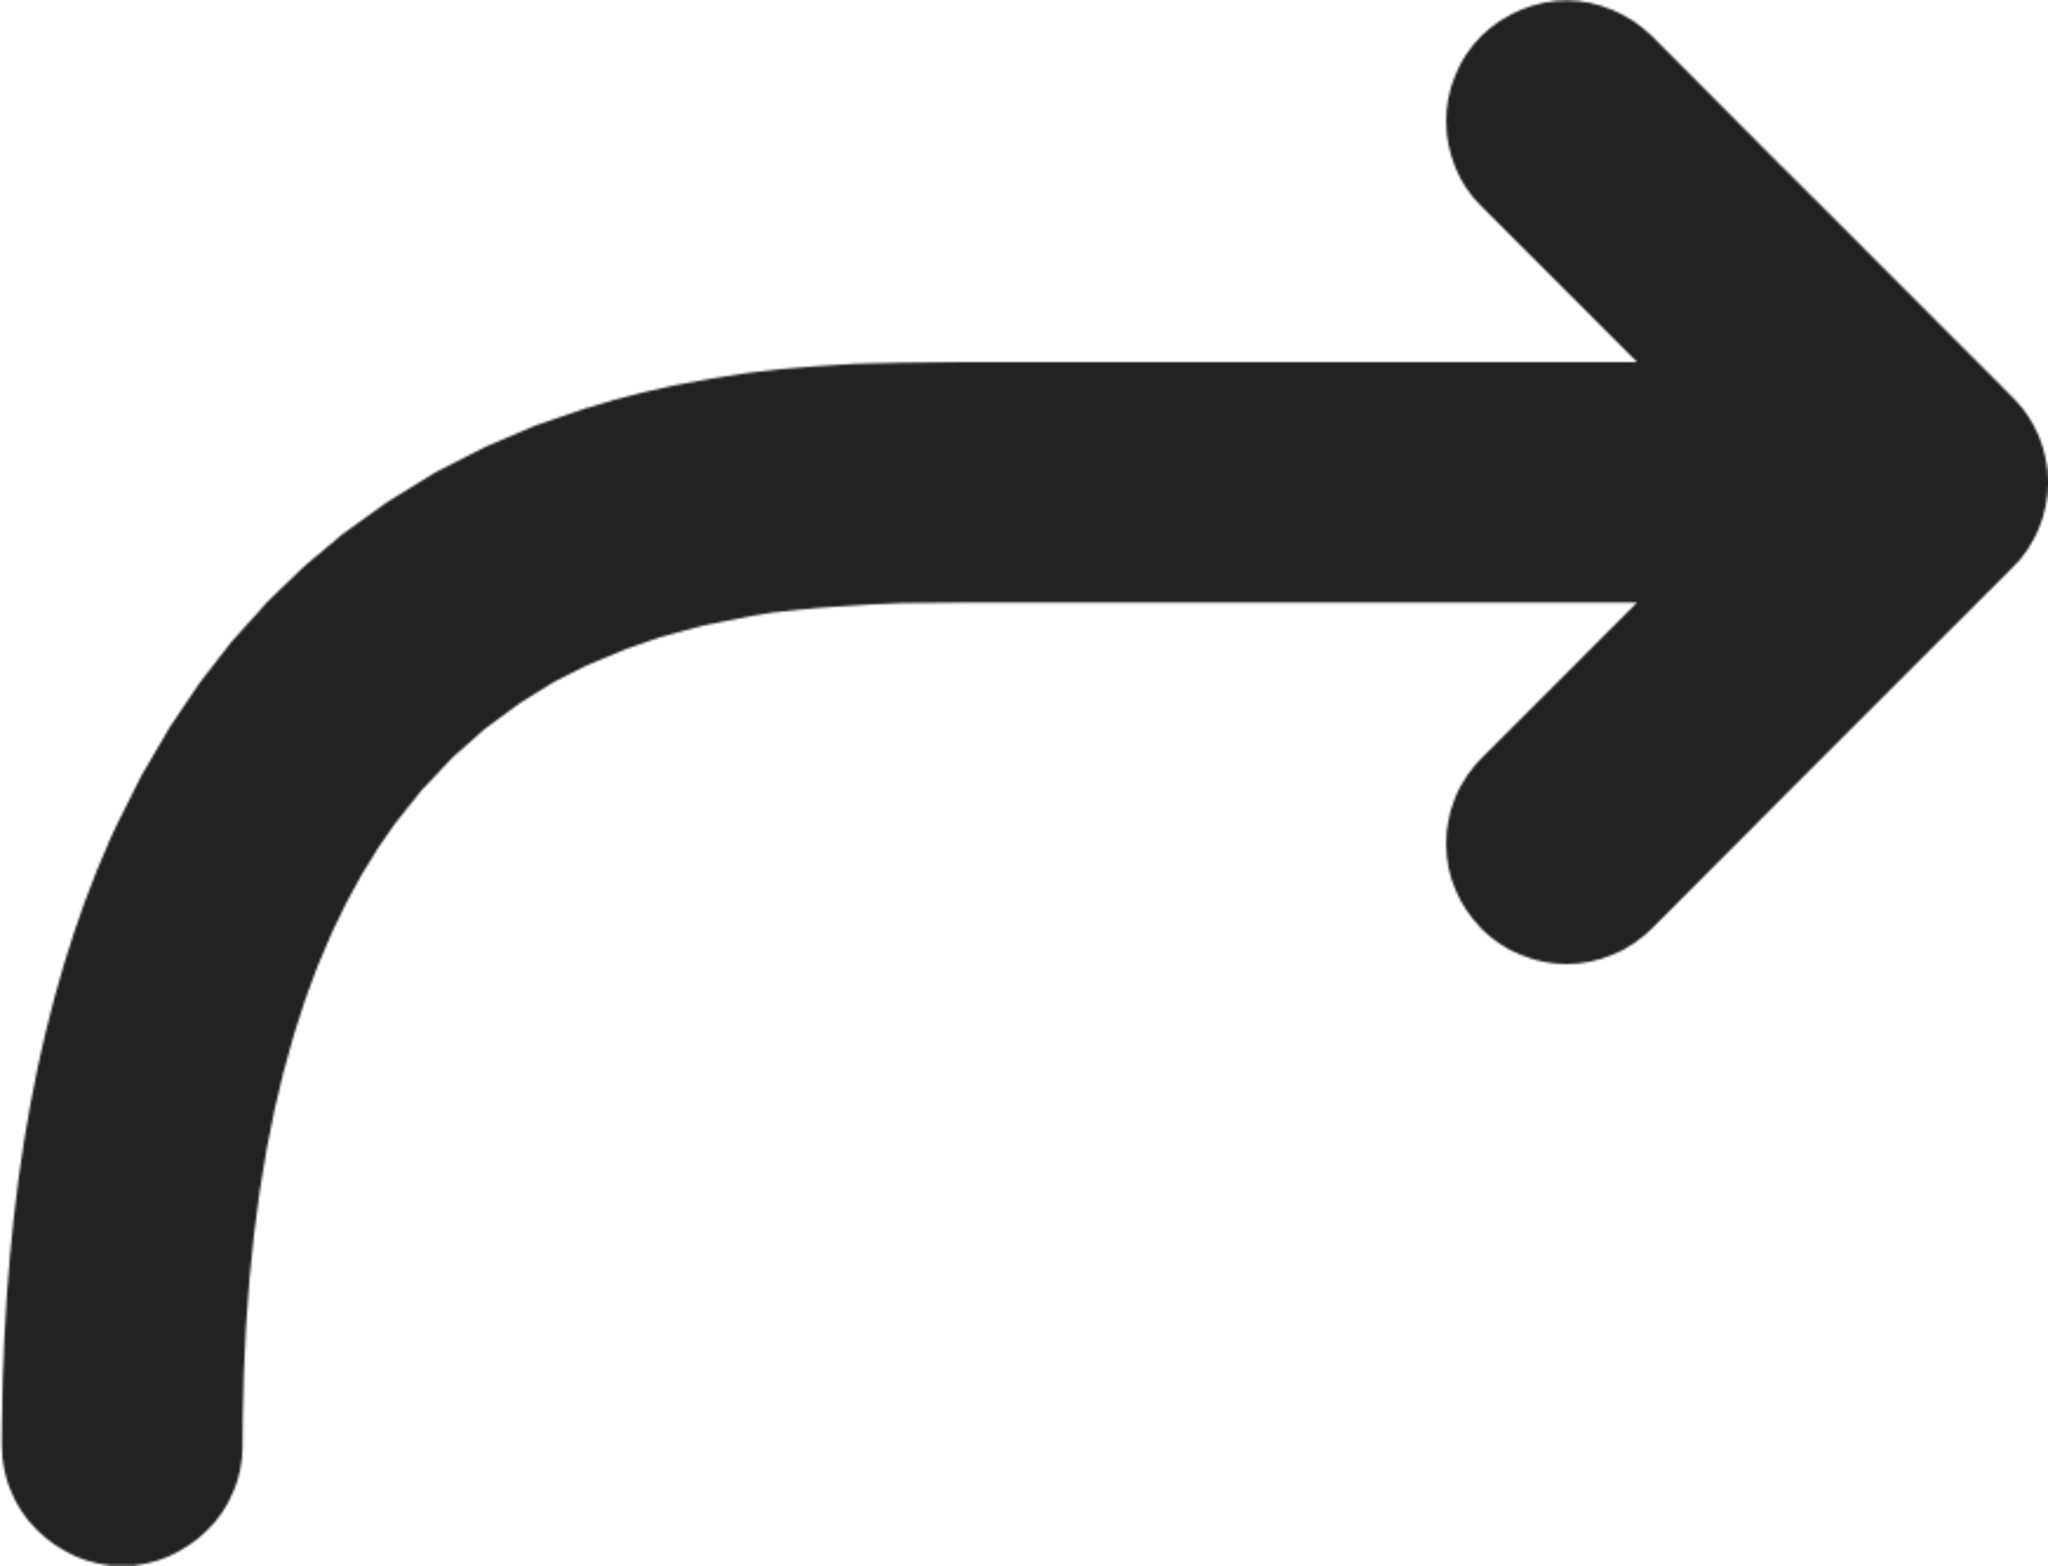 forward arrow icon